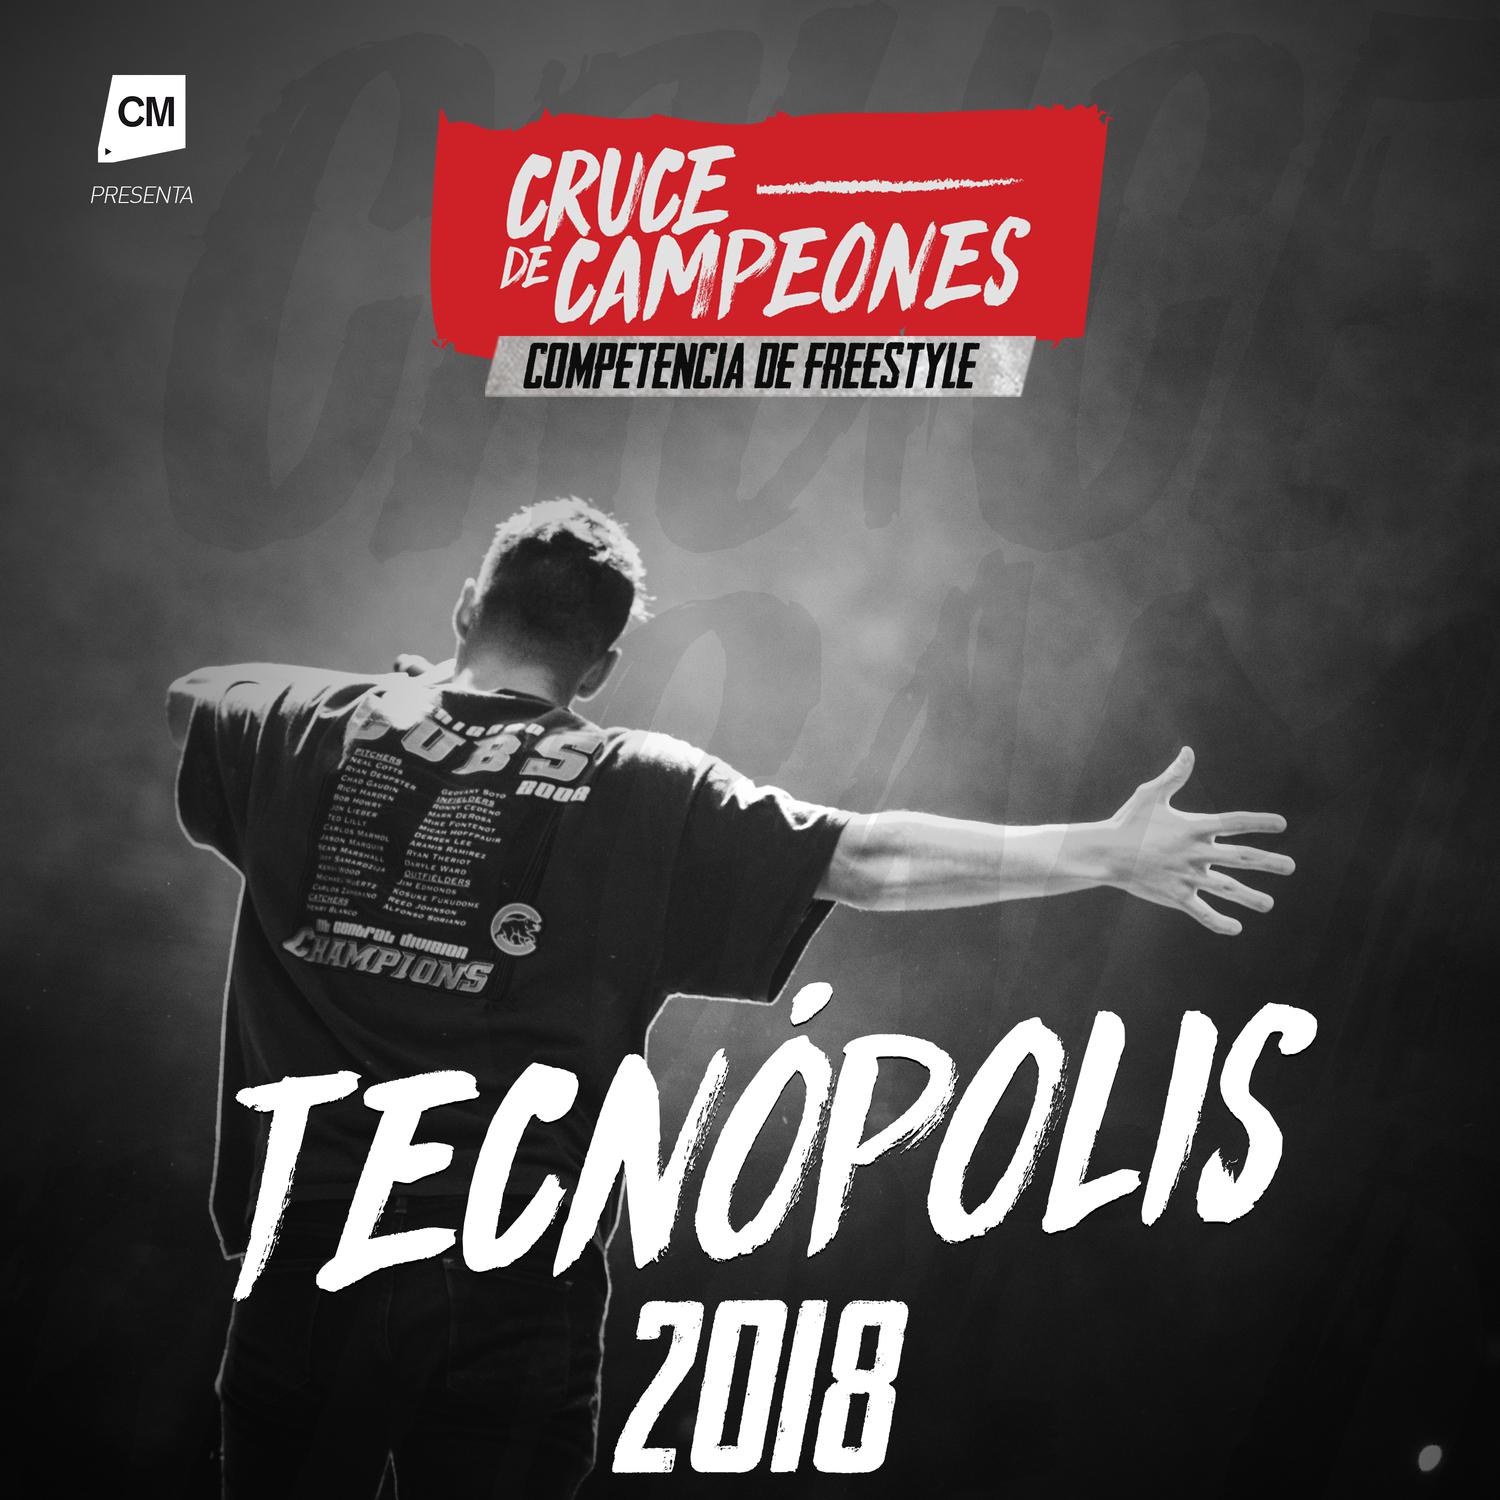 cruce de campeones - Tuqu vs Tego - Octavos de Final Cdc Tecnopolis 2018